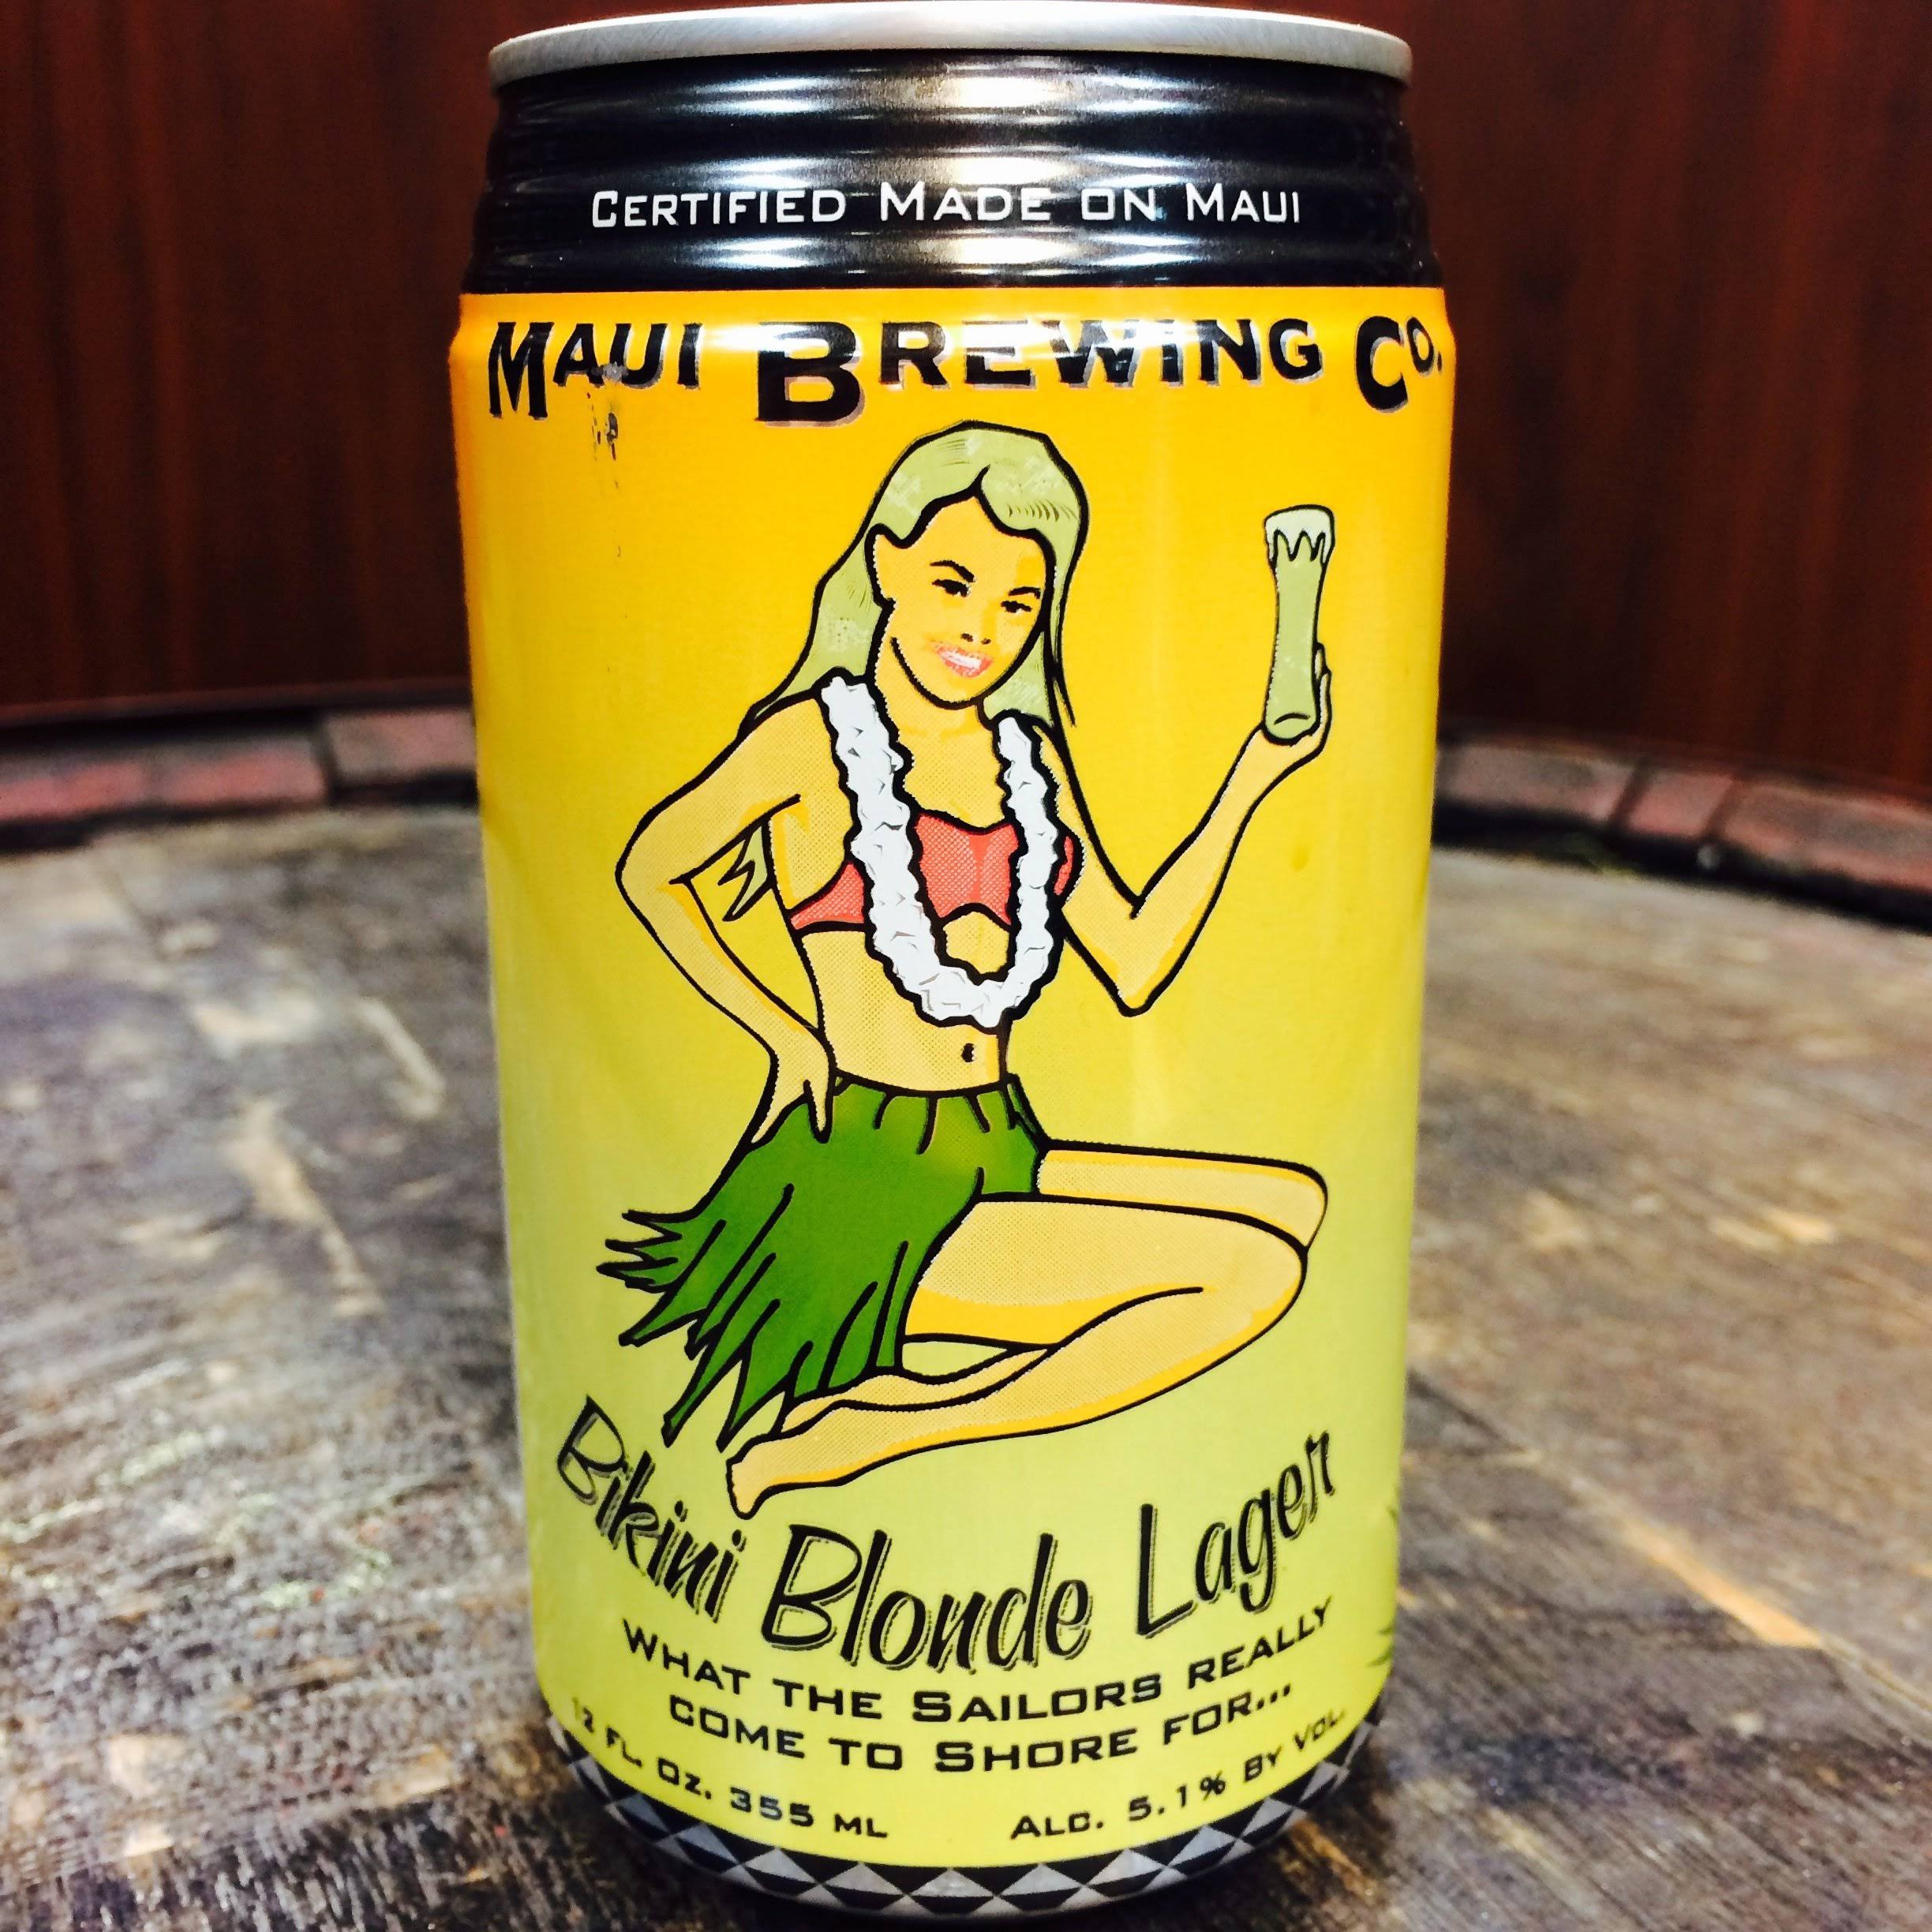 Maui Brewing Bikini Blonde Lager - 12oz